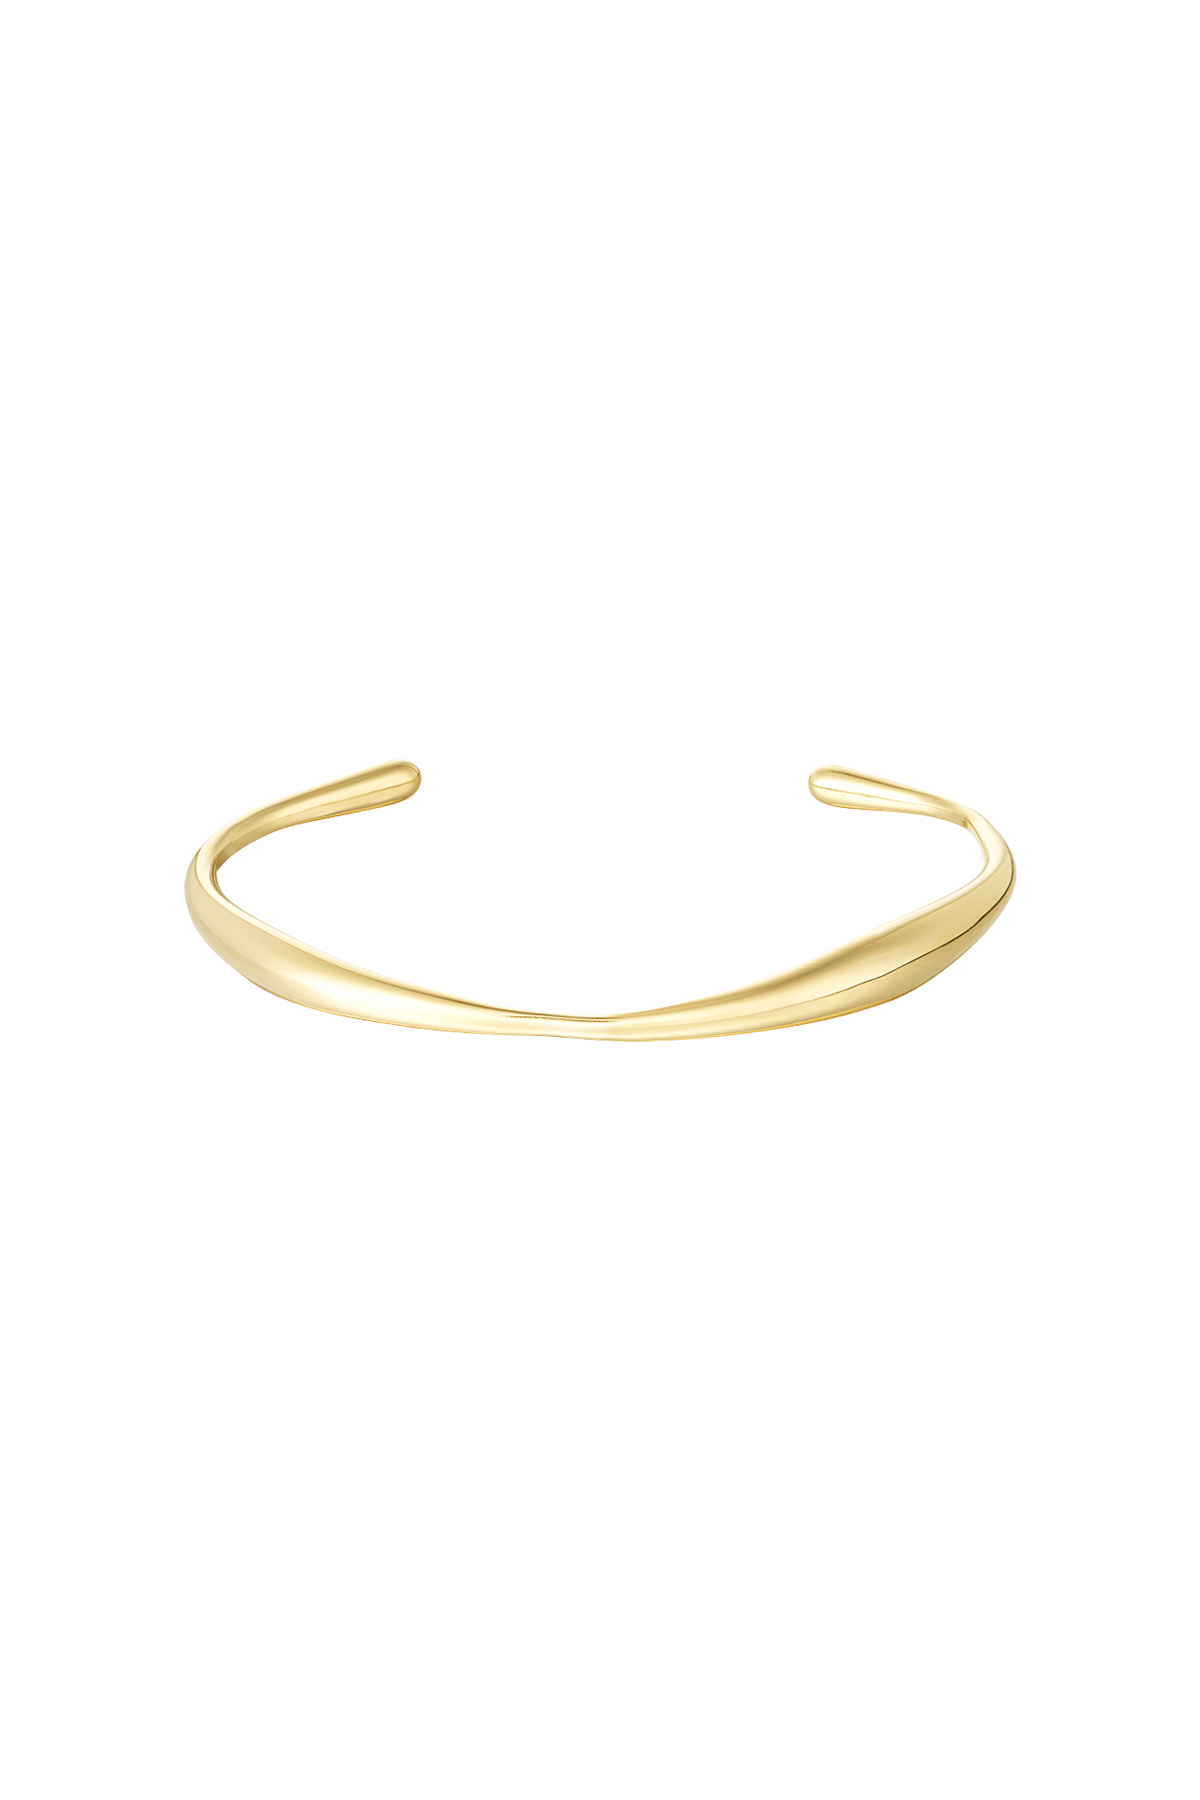 Organic shape bracelet - gold 